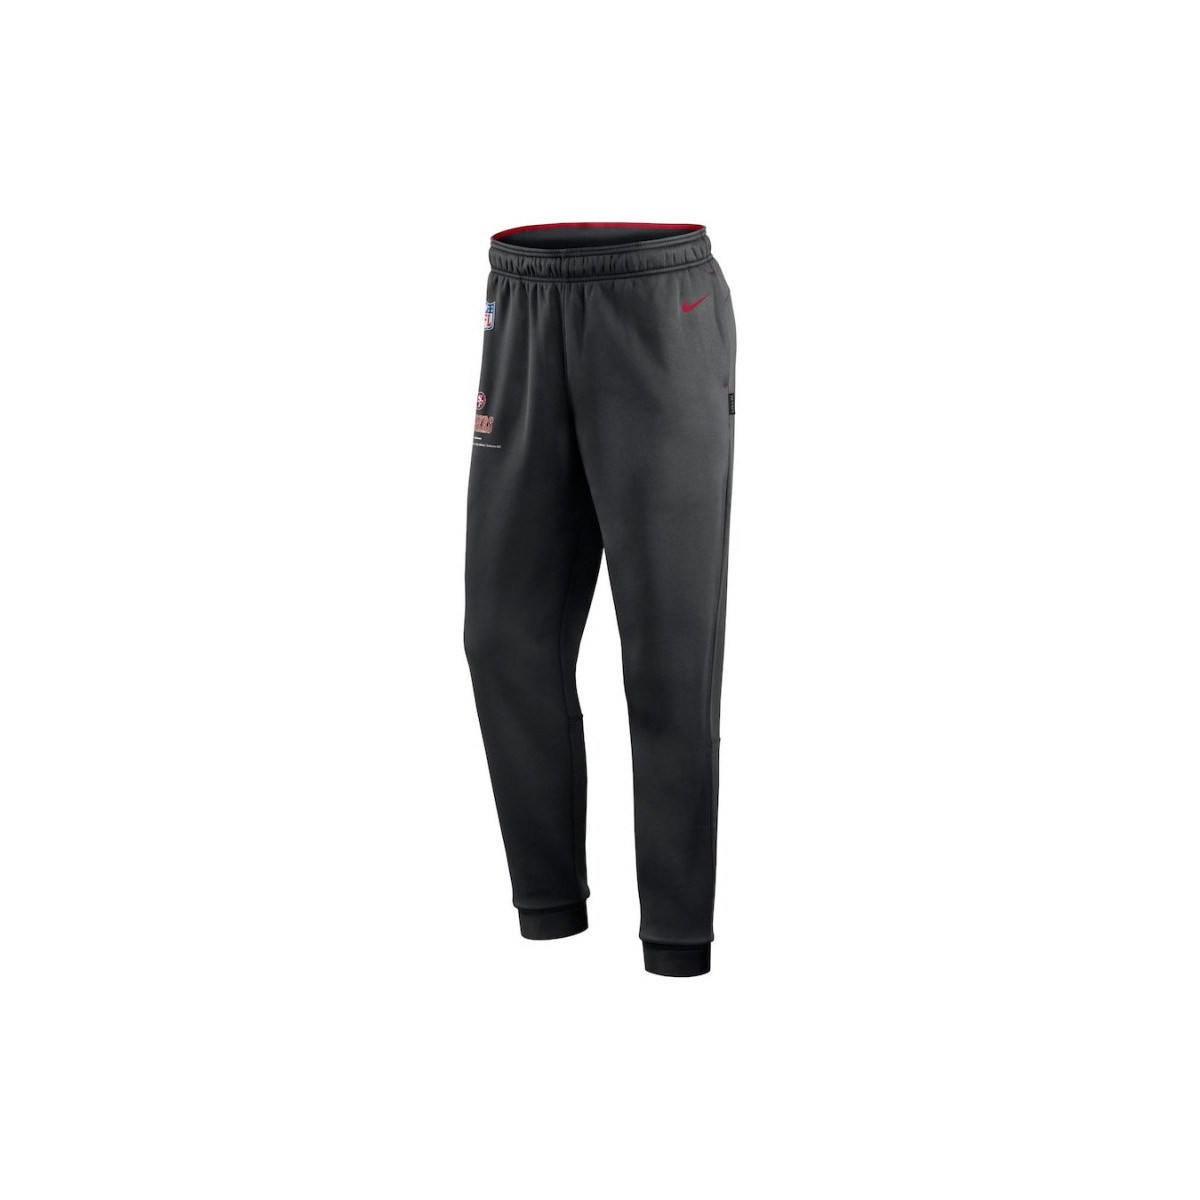 Vêtements Pantalons de survêtement Nike Pantalon NFL San Francisco 49e Multicolore